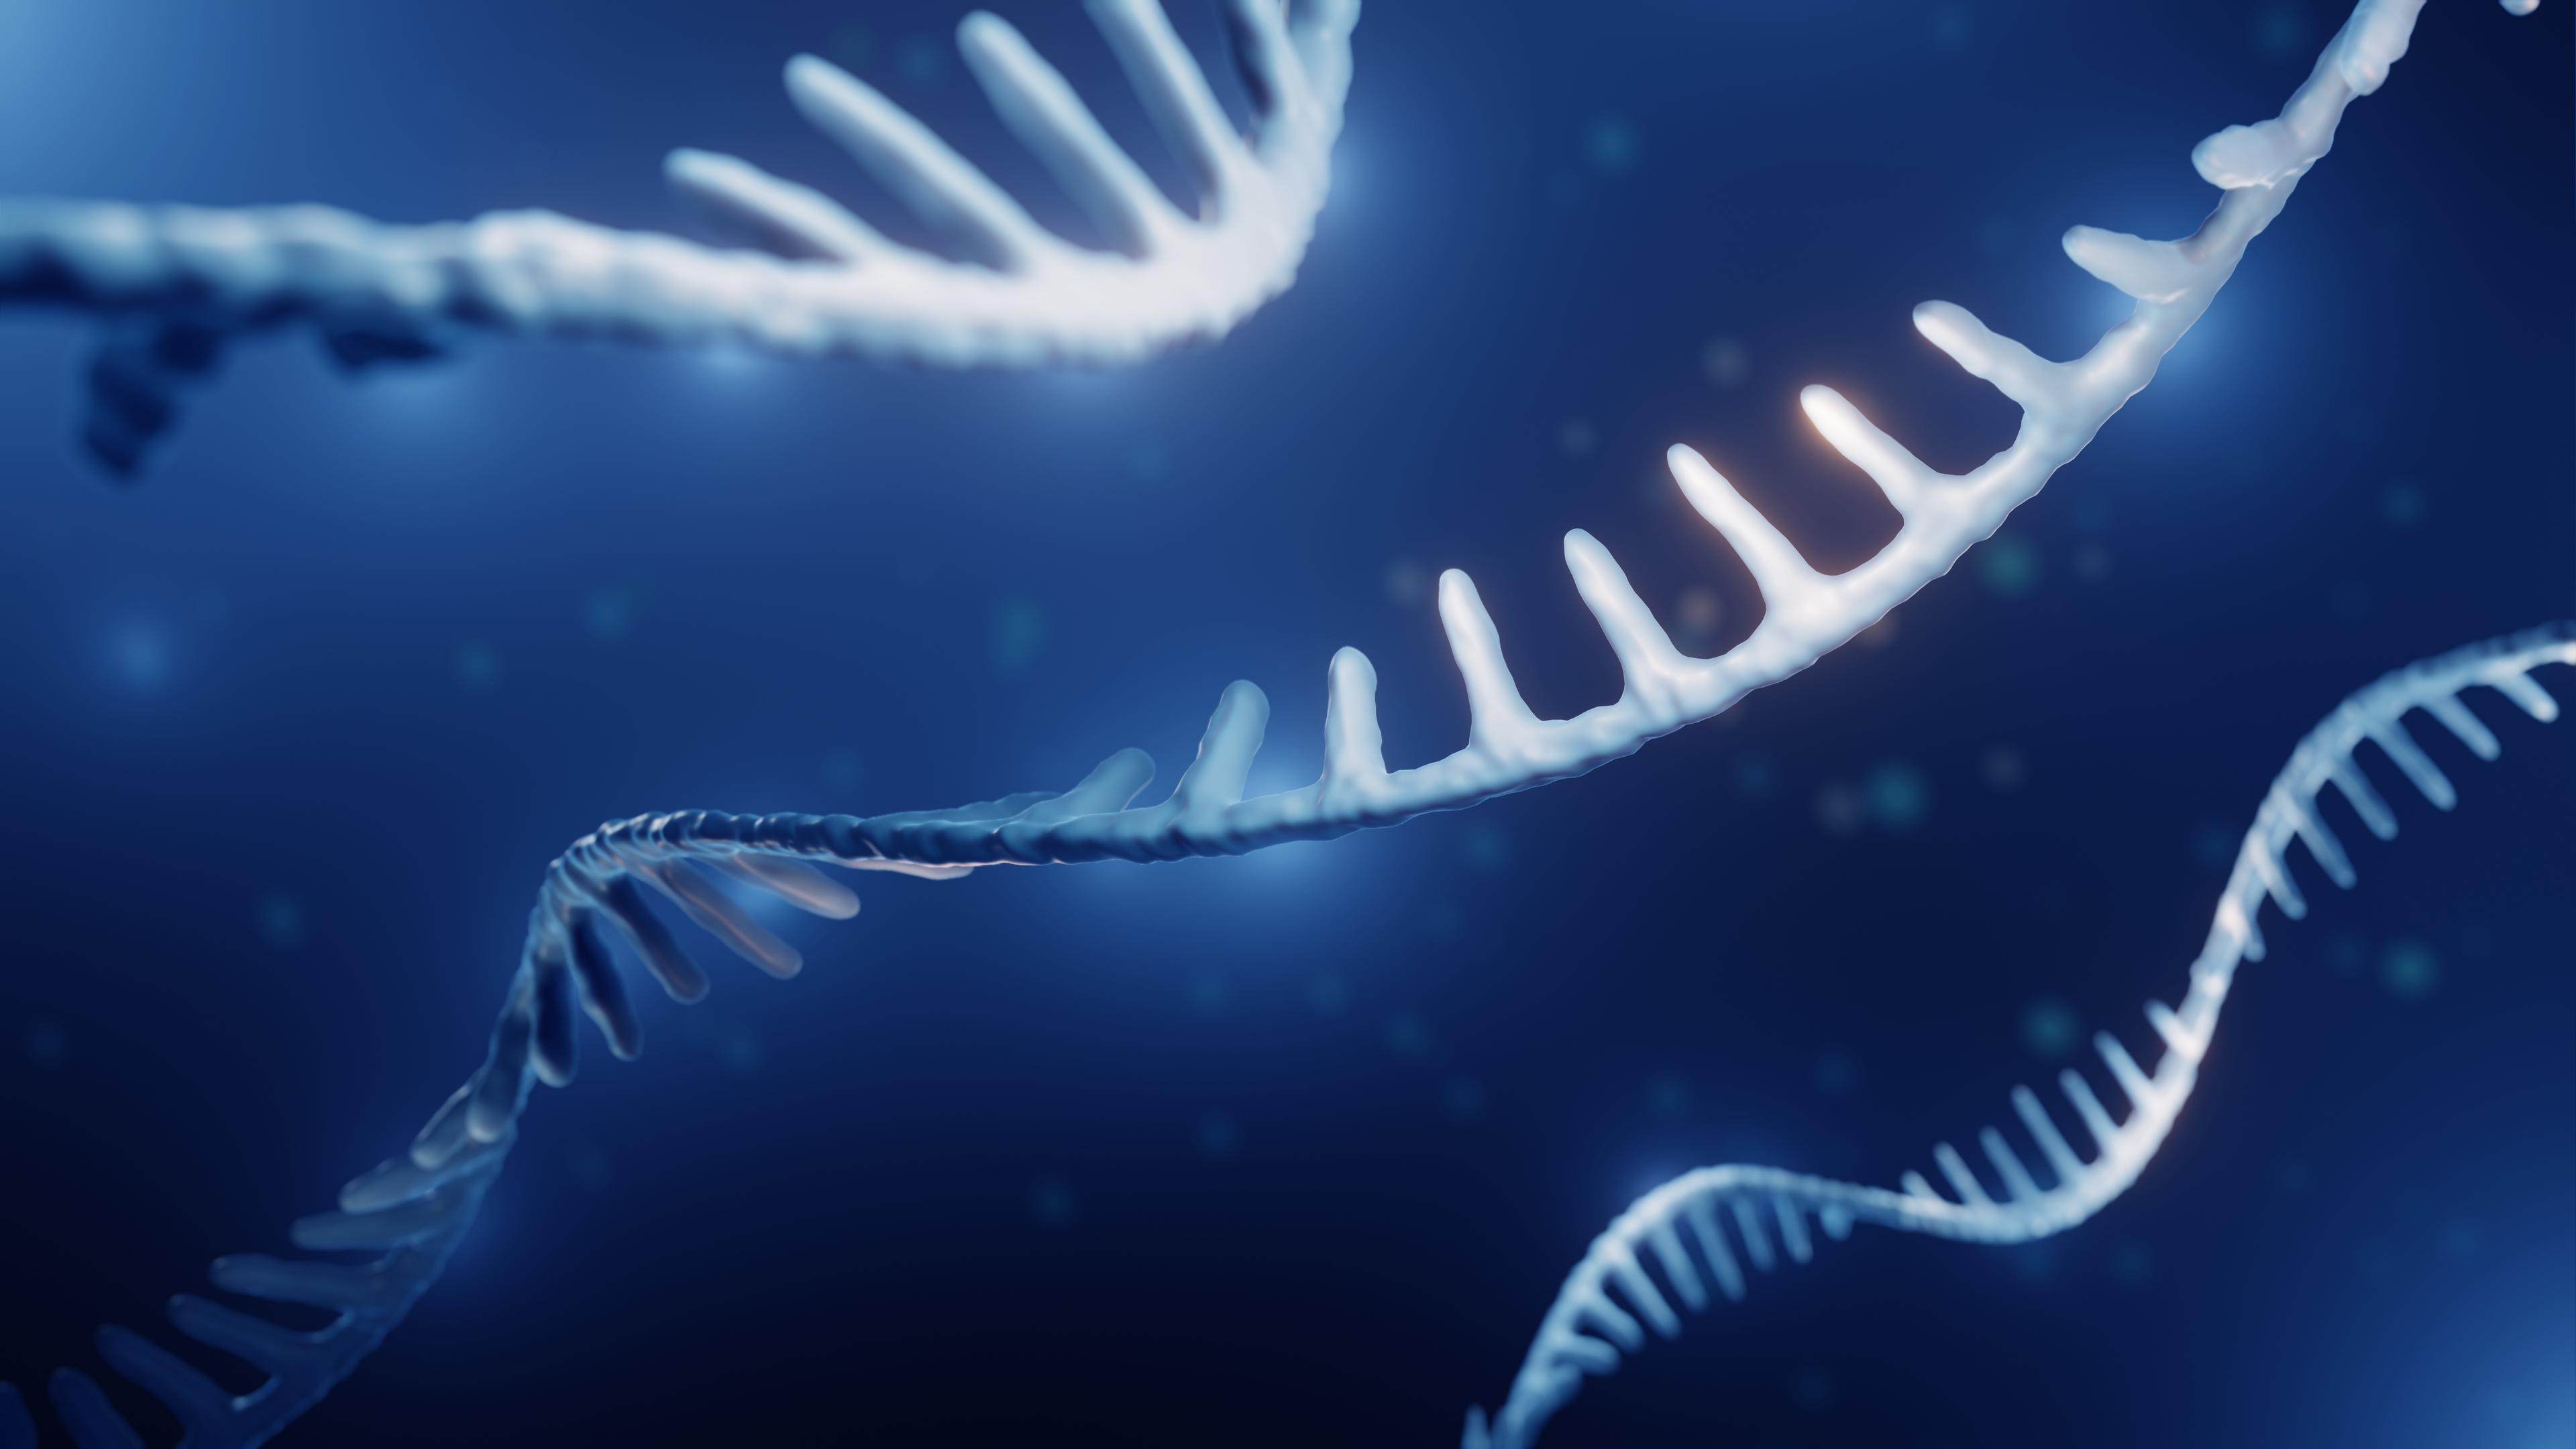 Product RNA technology image